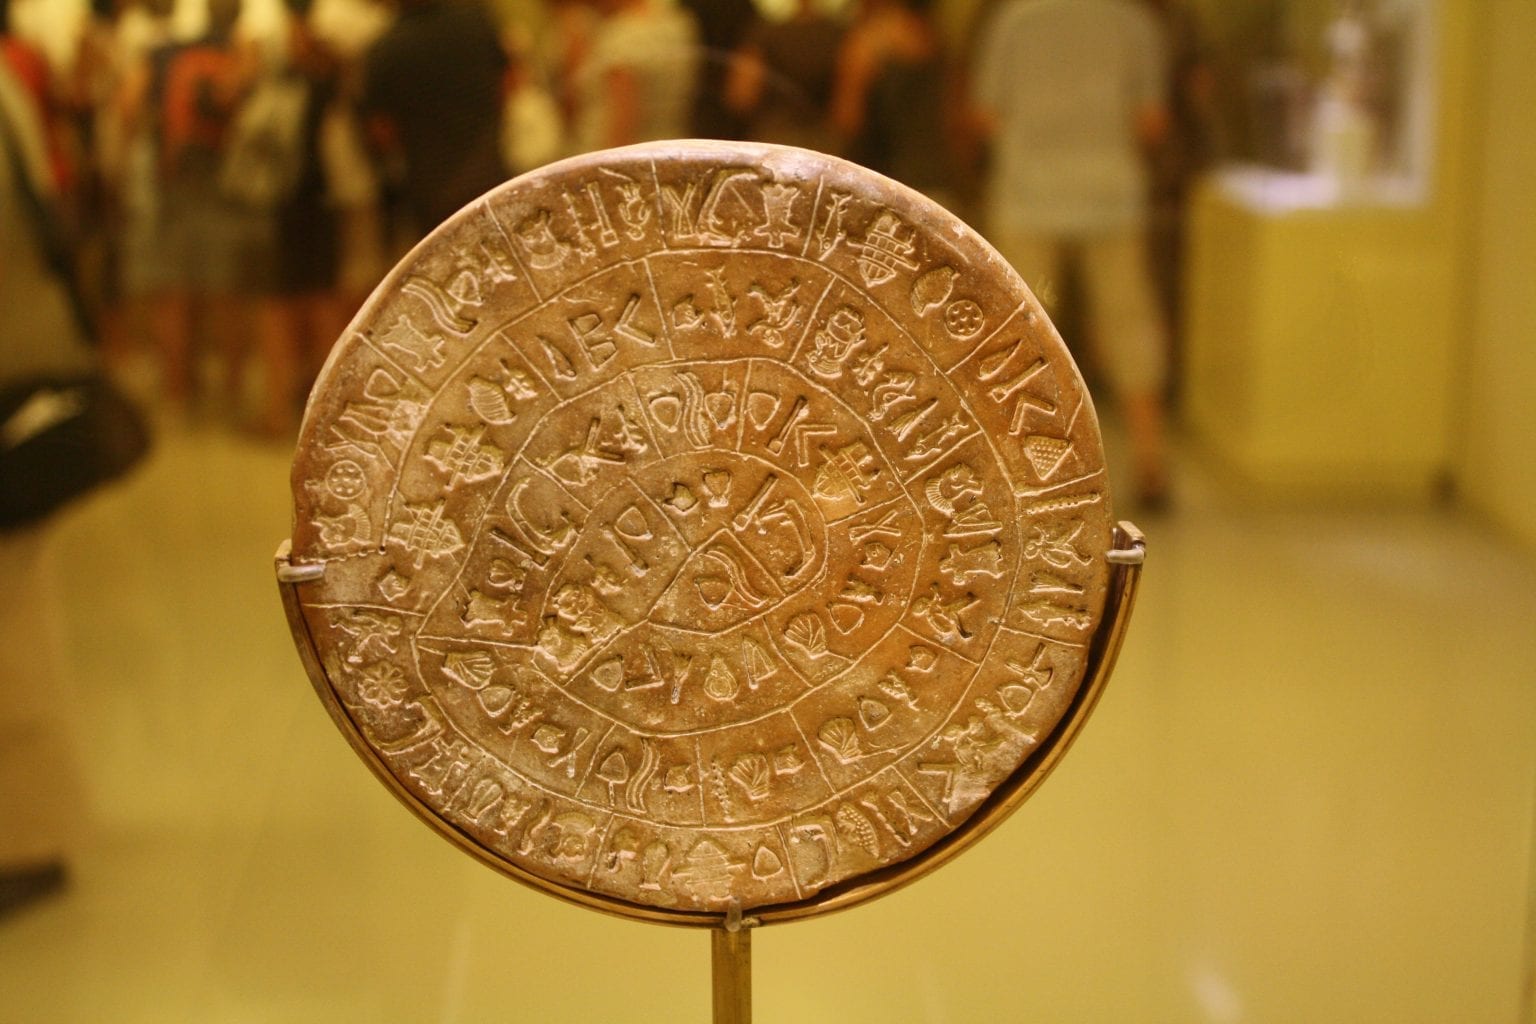 Side B of the same artifact. Credit: Ancient.eu